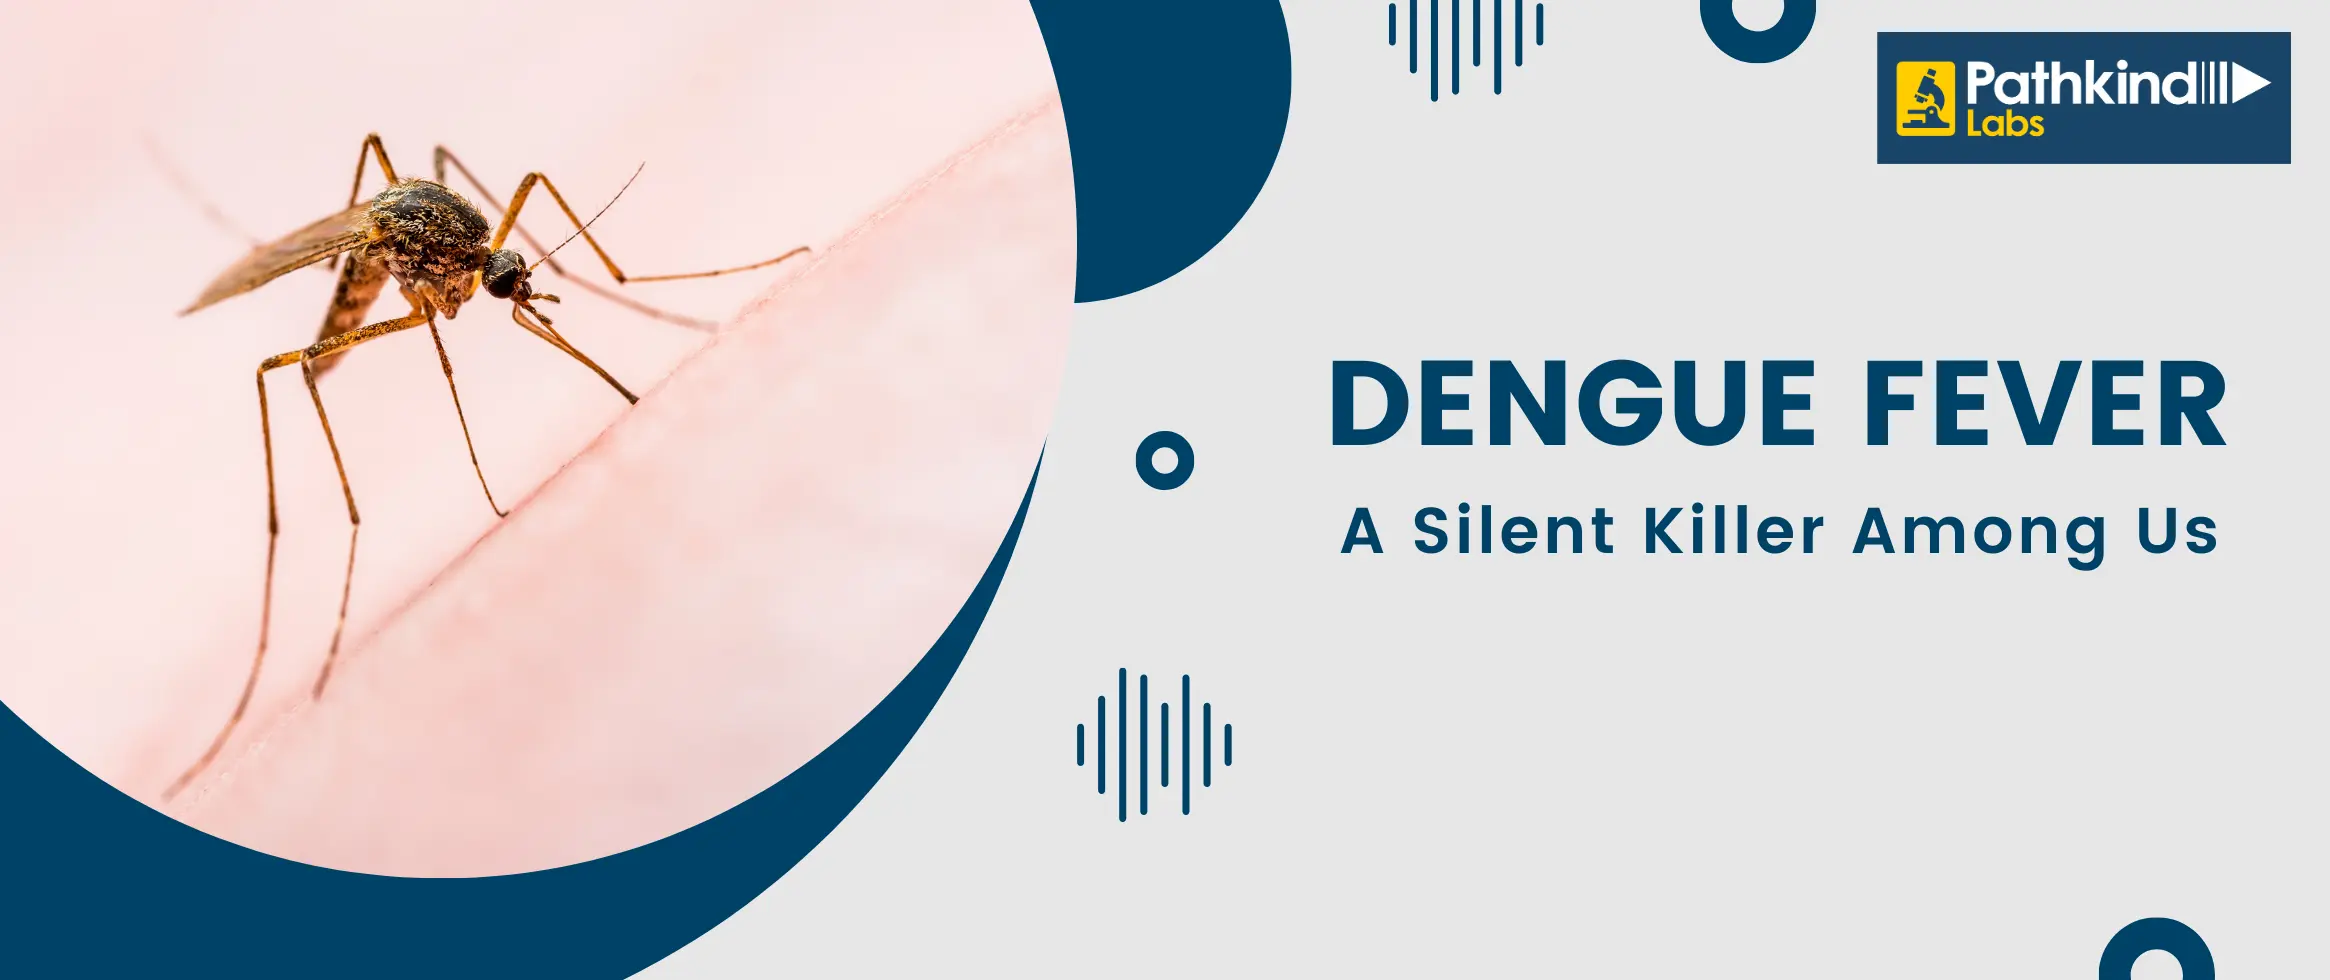 Is Dengue Fever a Silent Killer Among Us